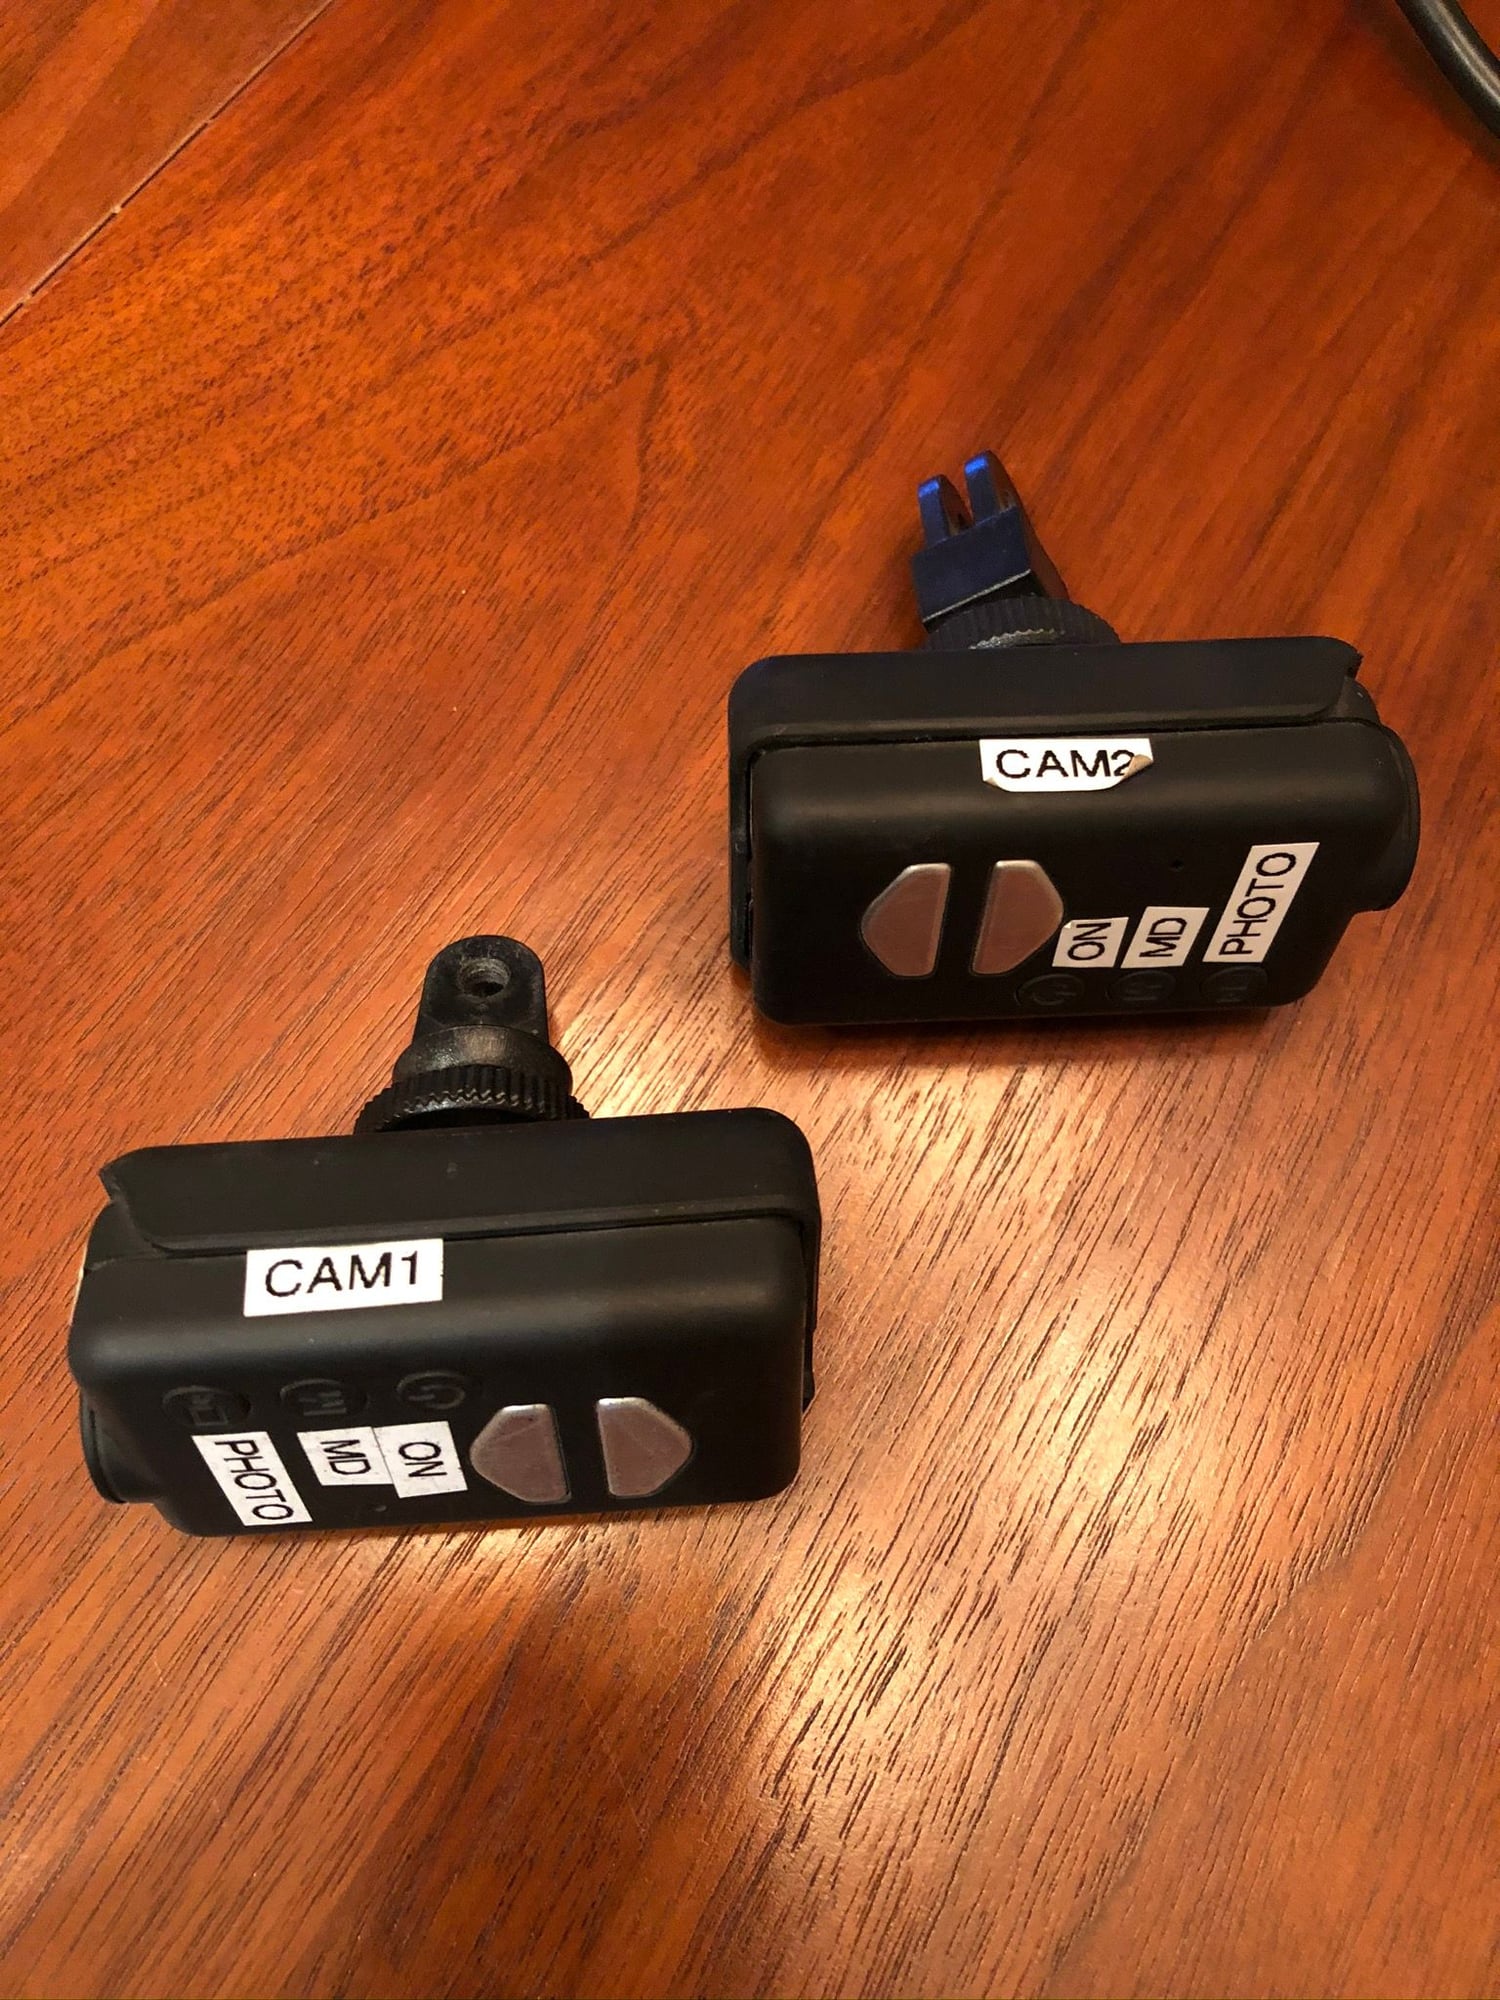 Accessories - Traqmate Traqdash Video system with Traqdata module and dual Mobius cameras - Used - Walnut Creek, CA 94598, United States